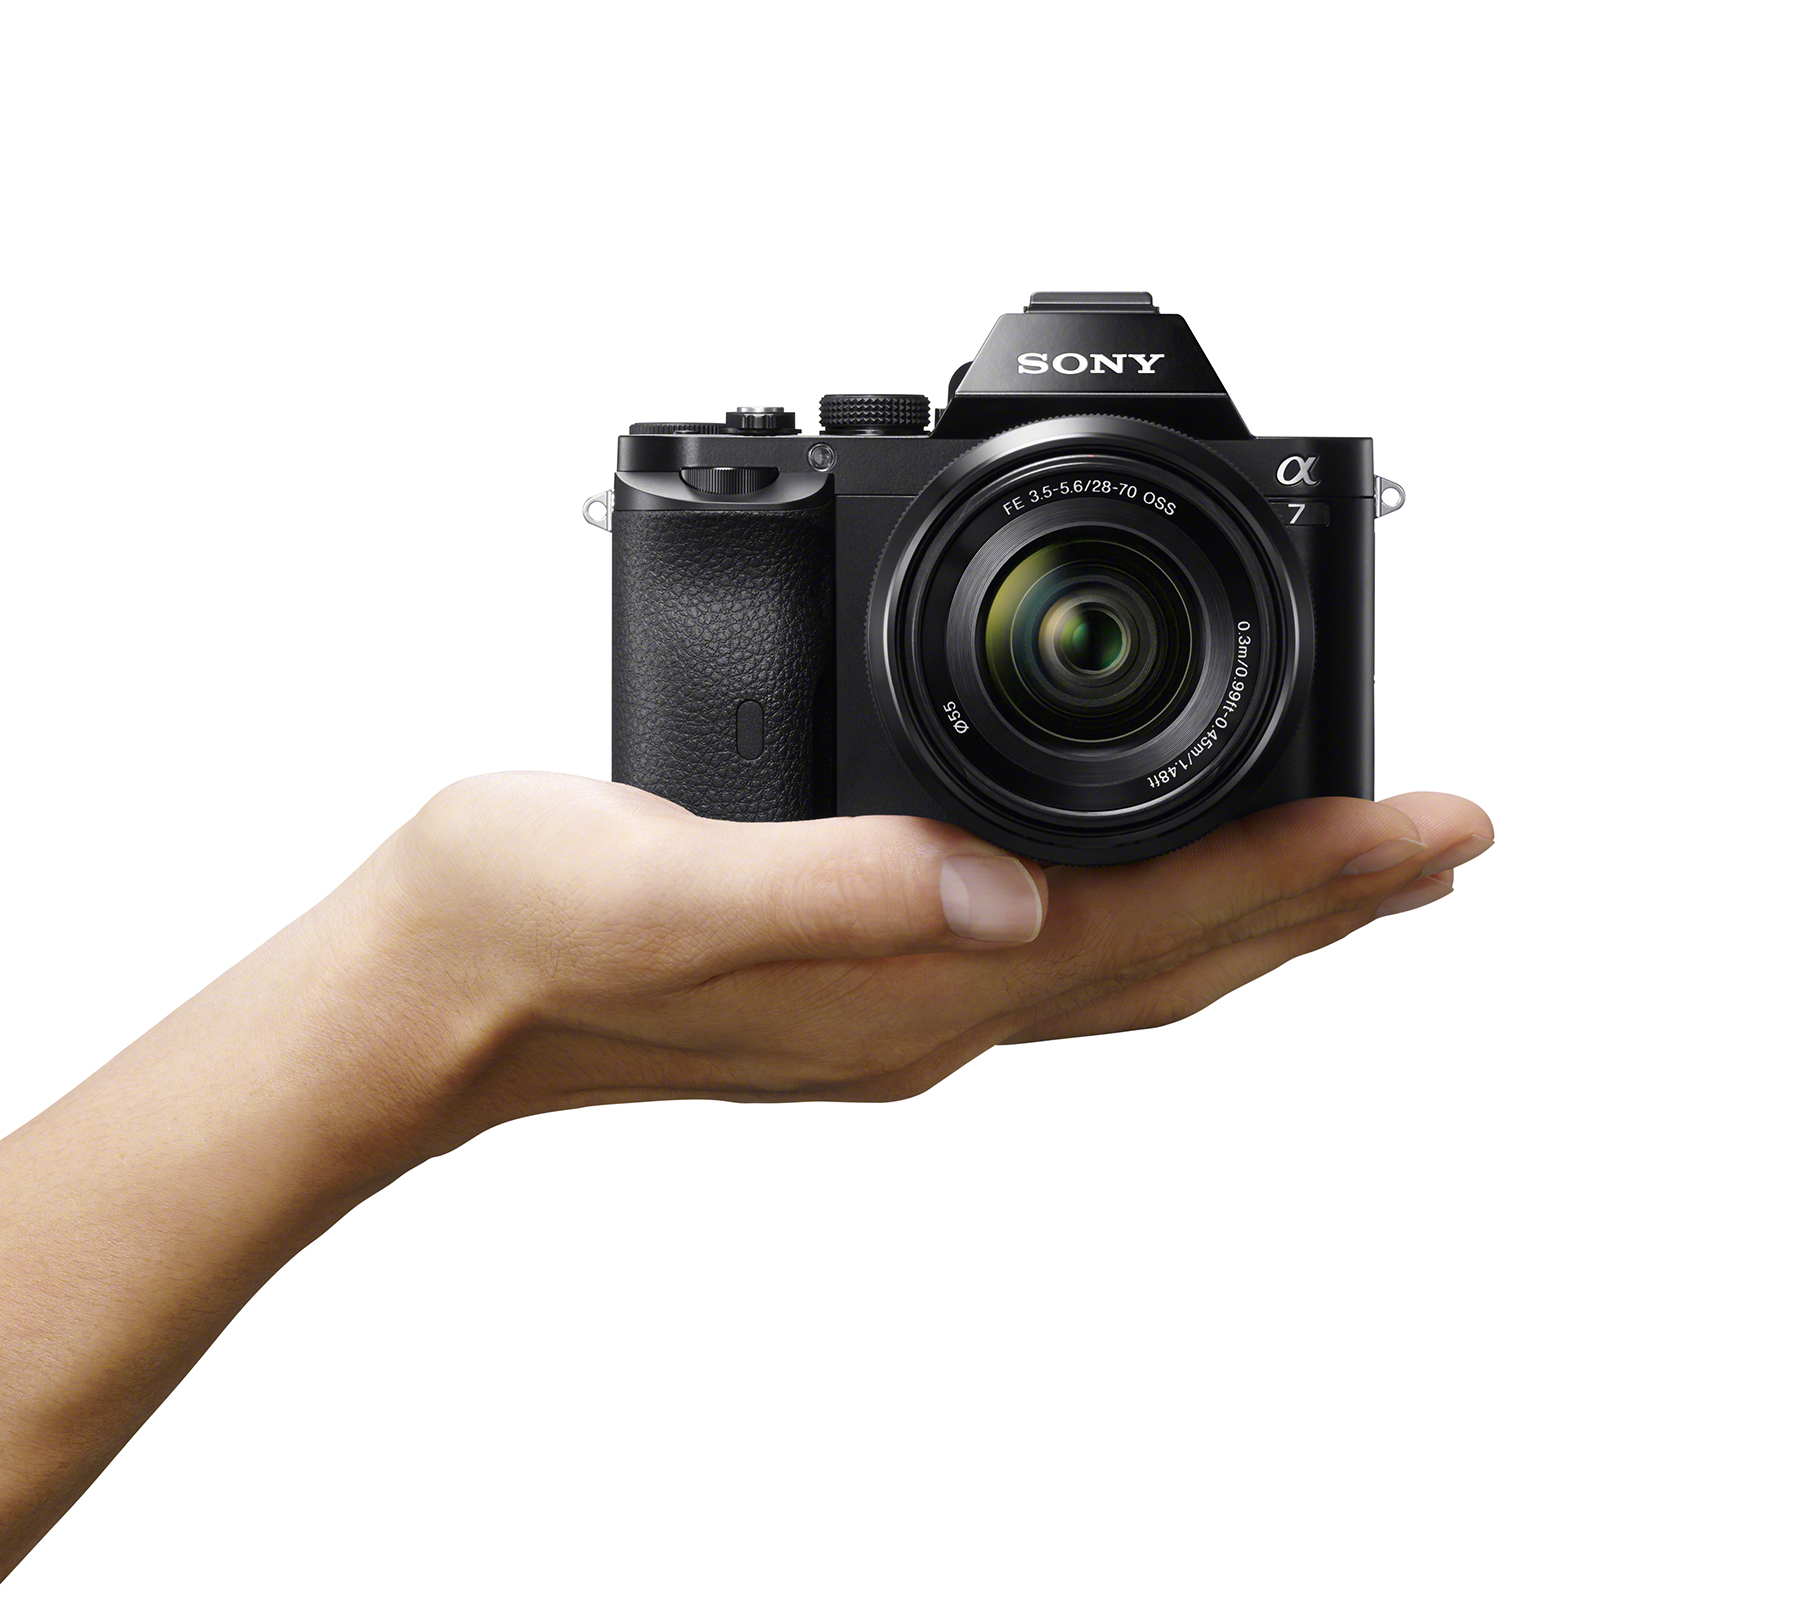 Sony Alpha a7 Full Frame Mirrorless Camera - Black - image 3 of 5